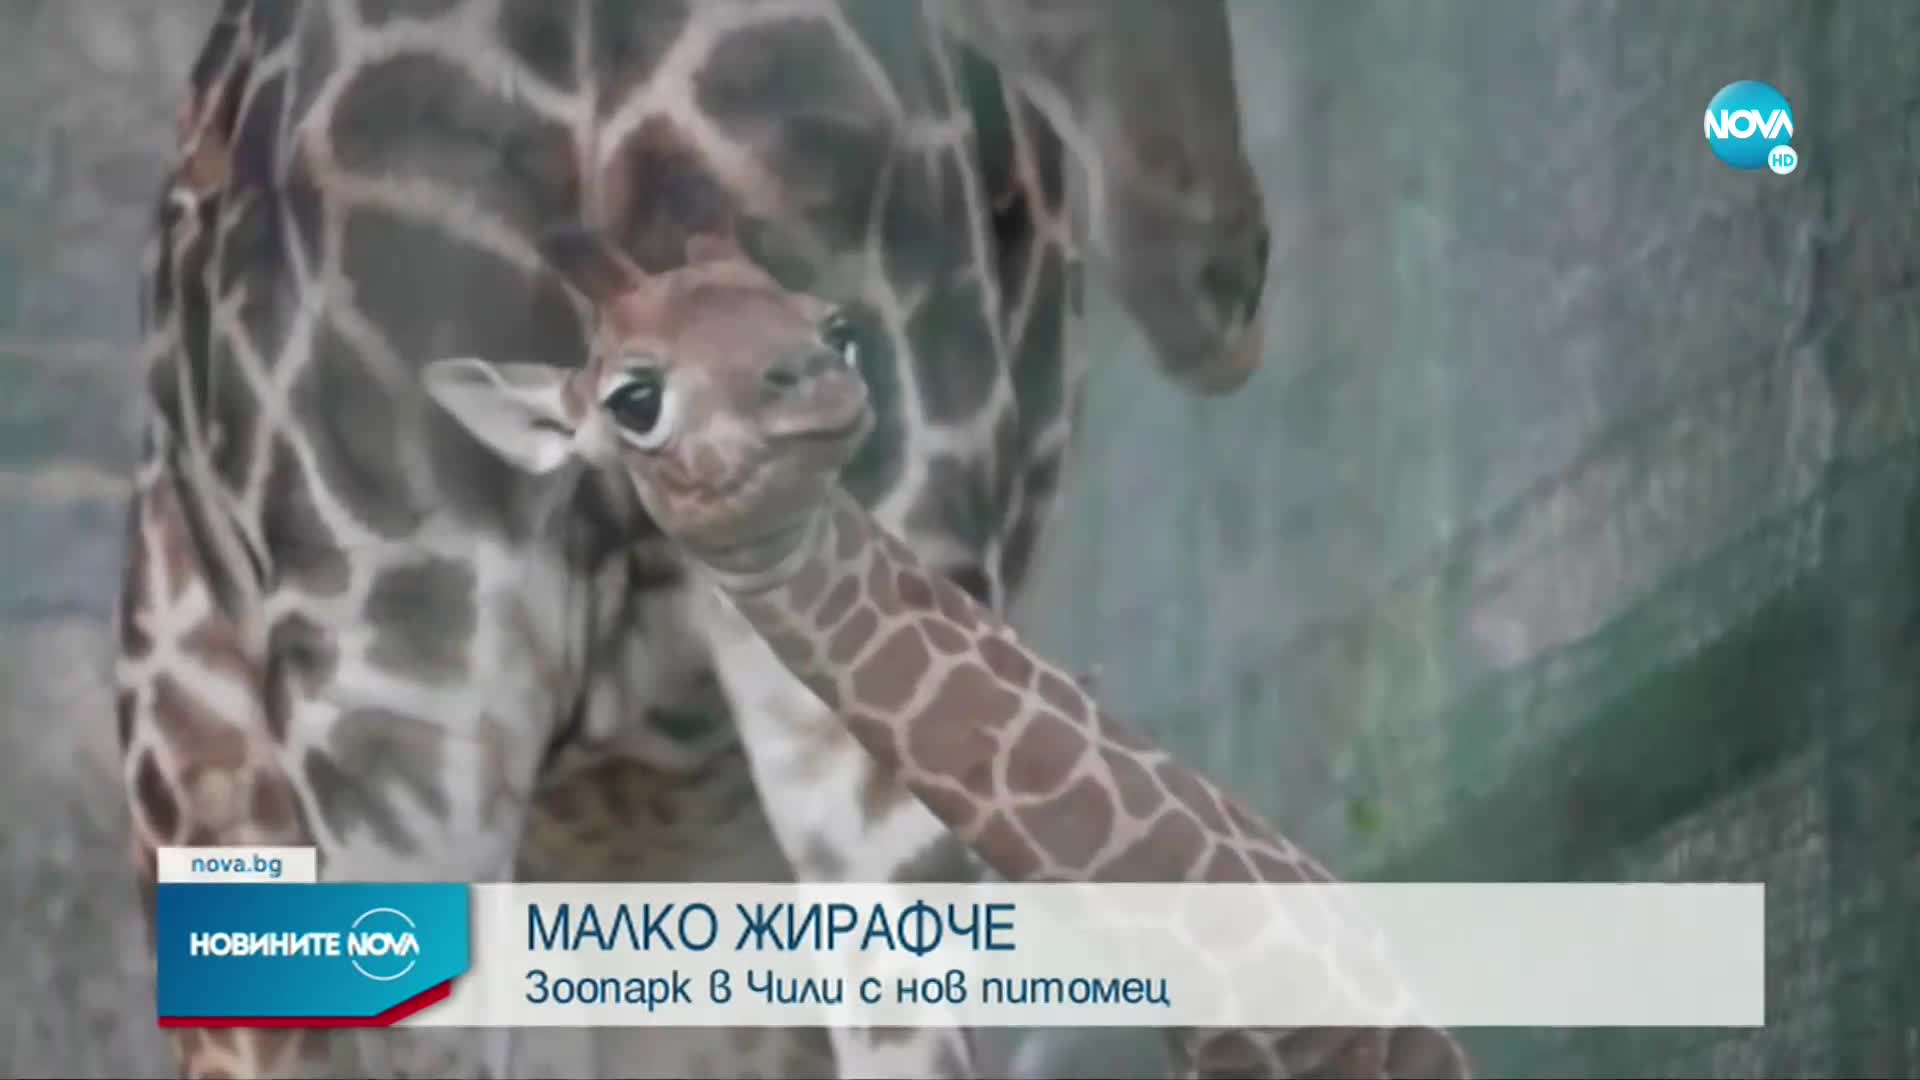 В Чили се роди 100-килограмово бебе жирафче